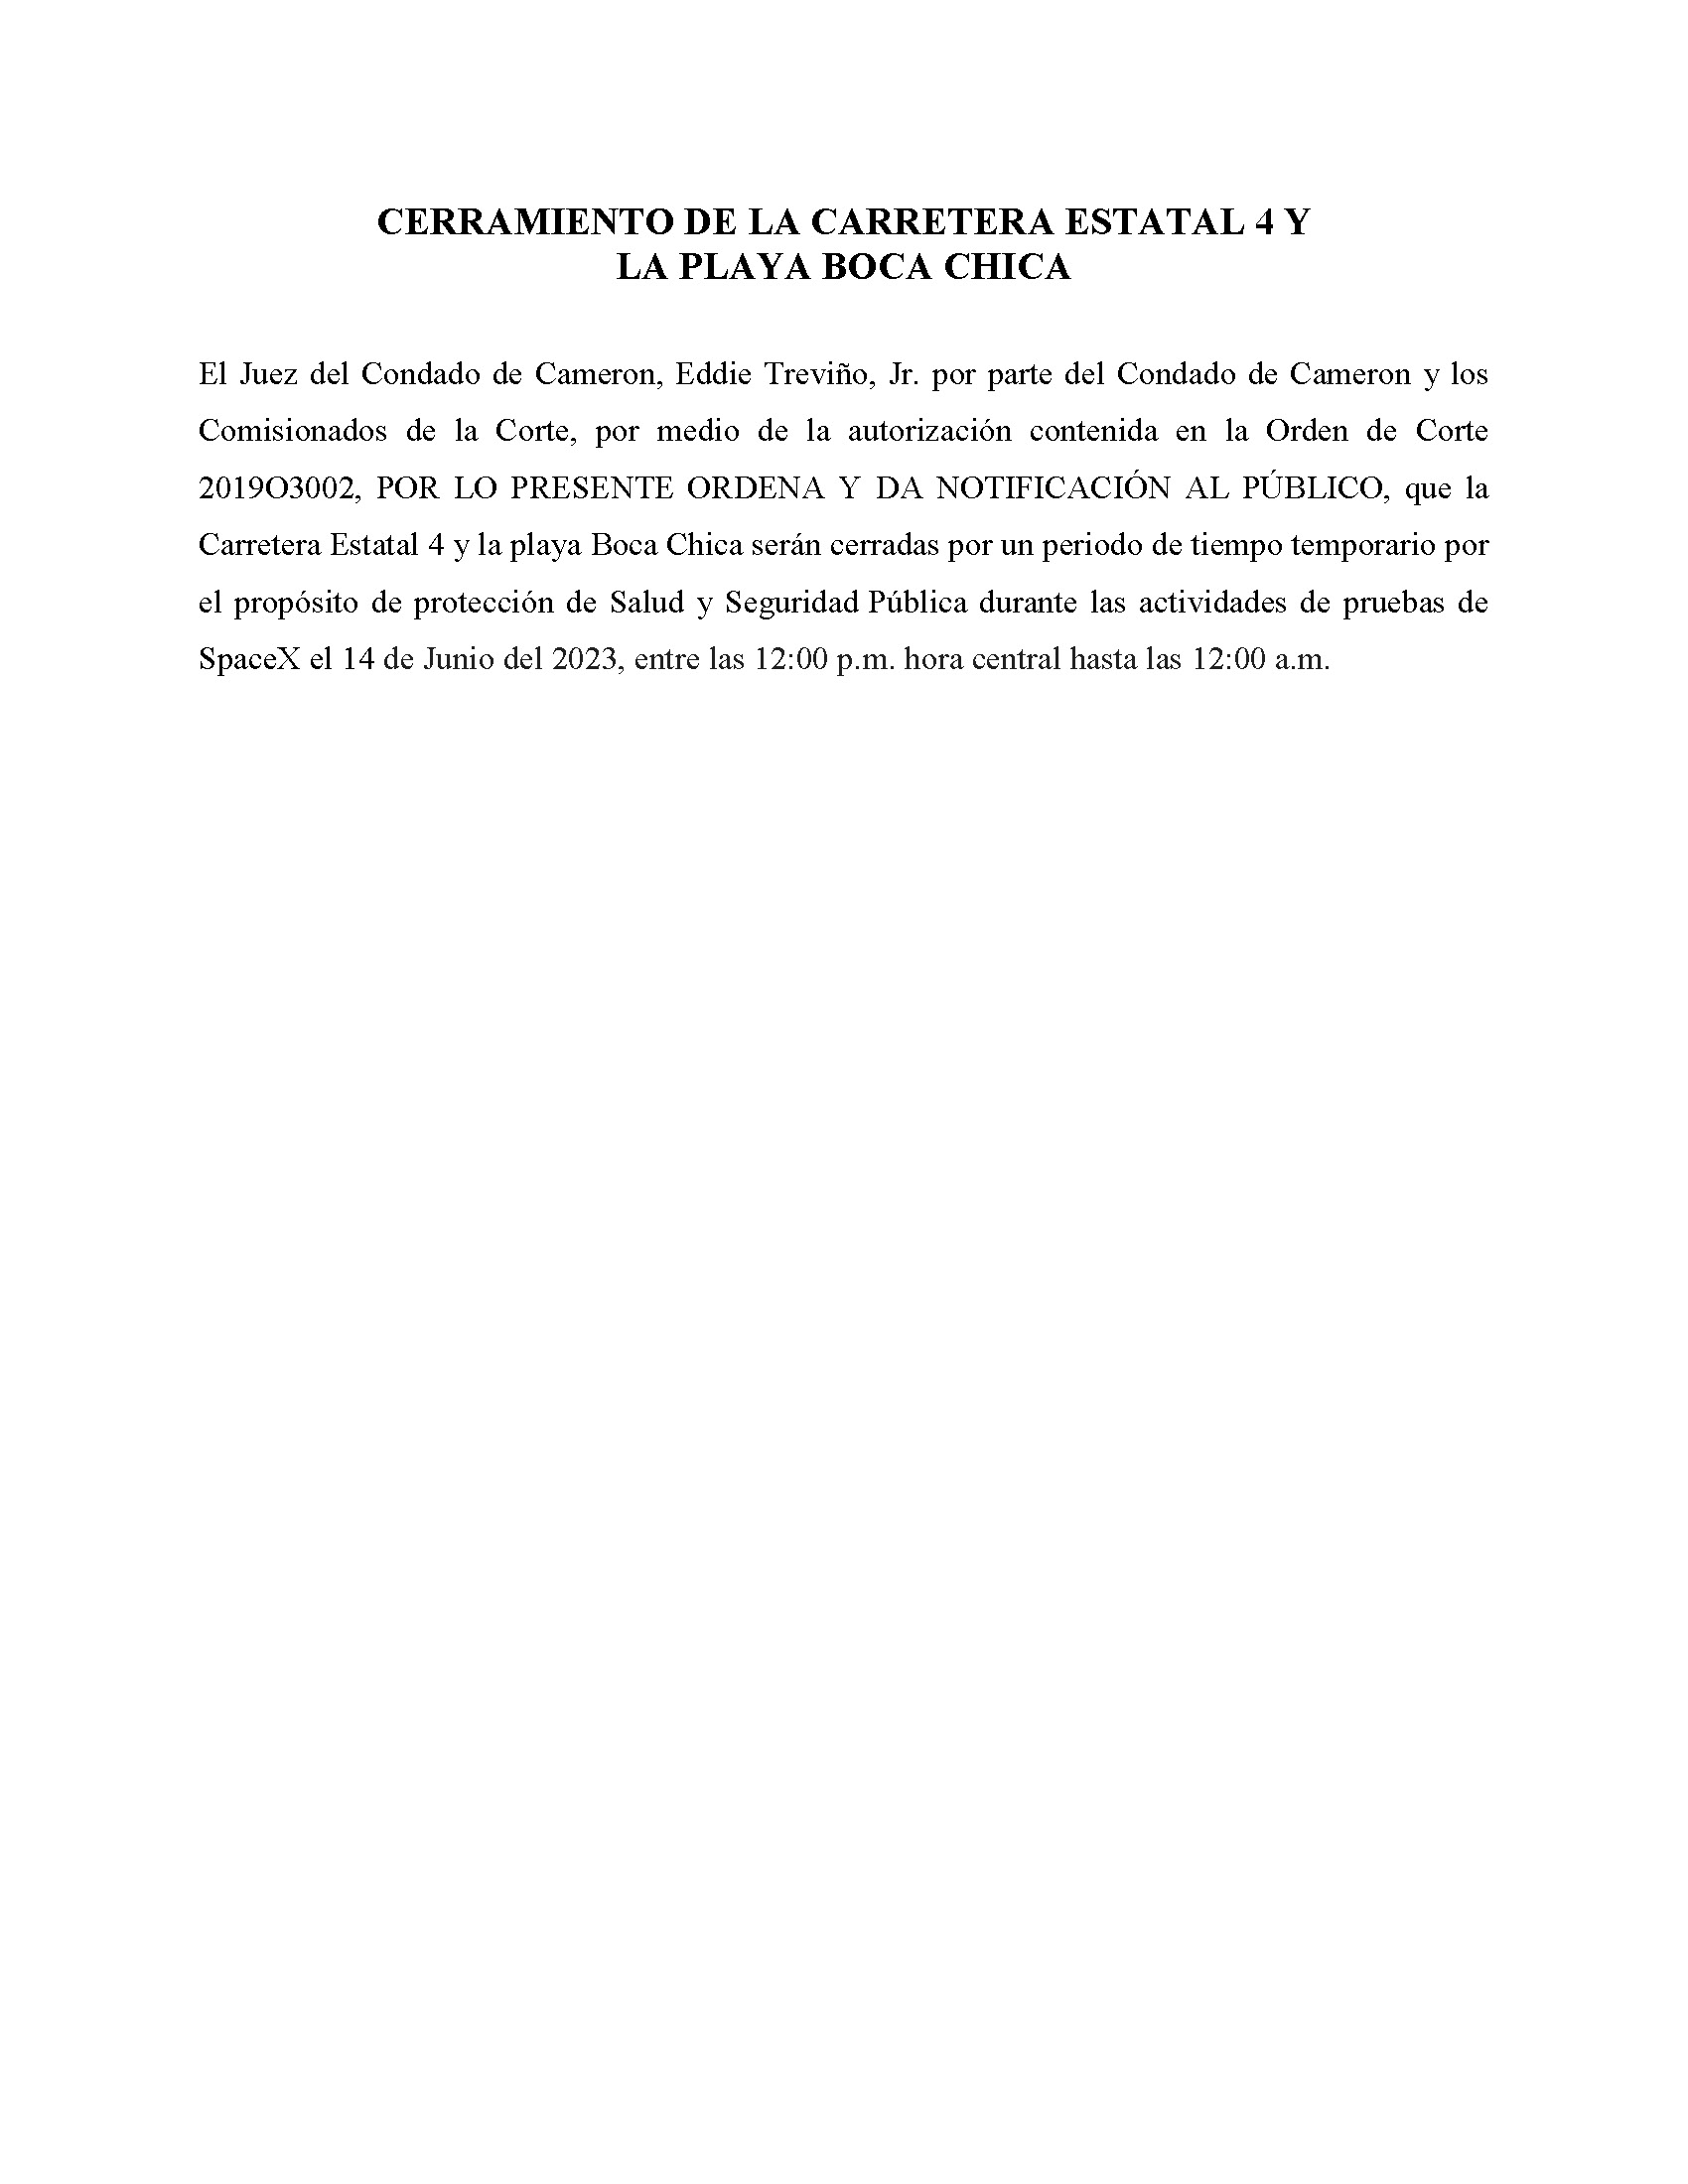 ORDER.CLOSURE OF HIGHWAY 4 Y LA PLAYA BOCA CHICA.SPANISH.06.14.23